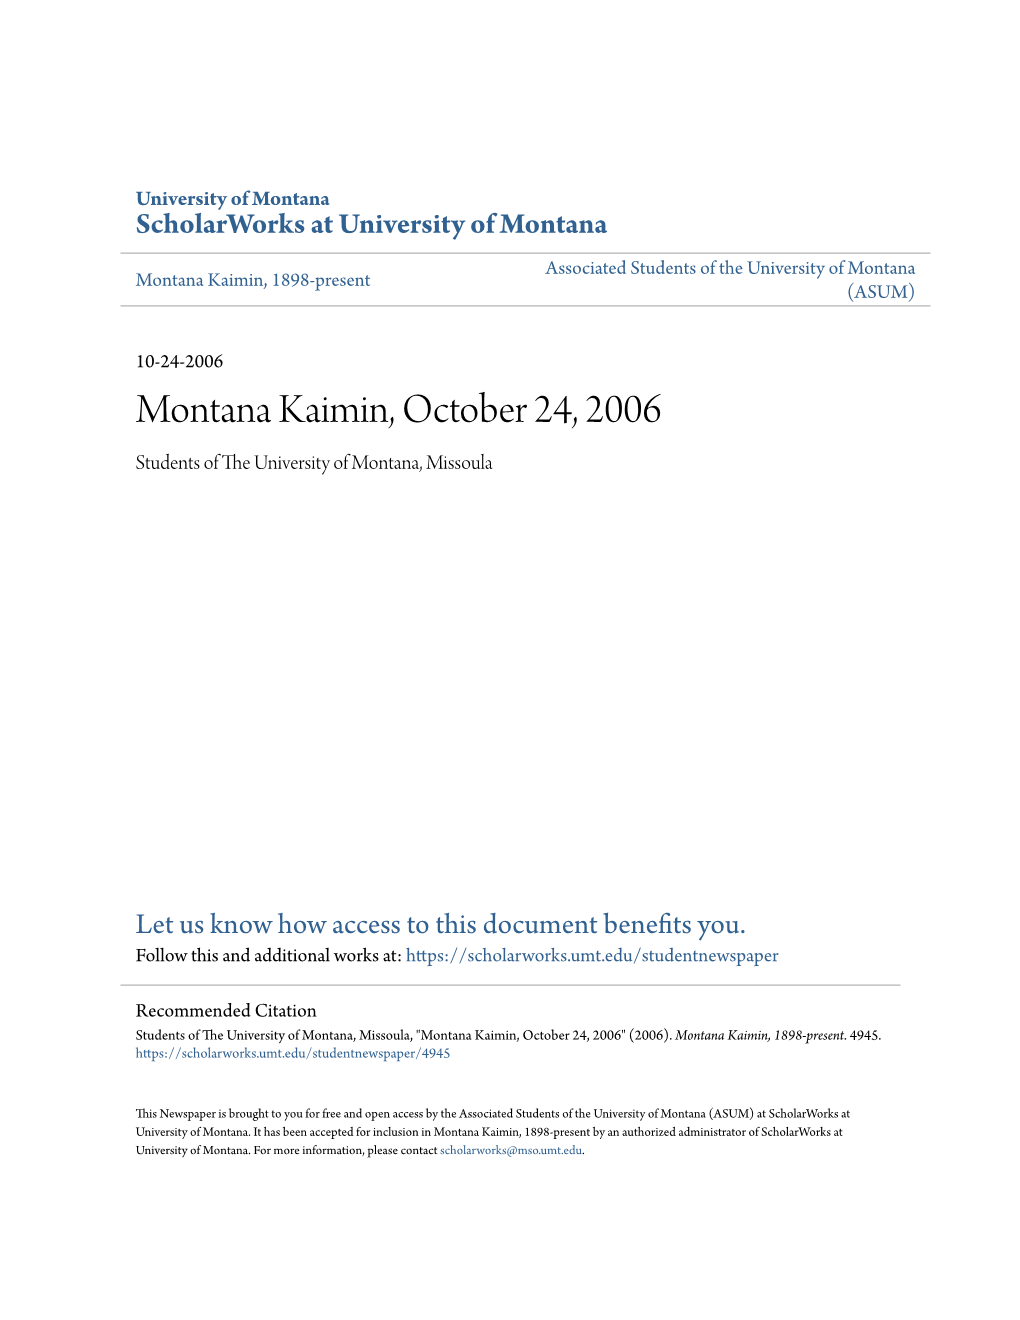 Montana Kaimin, October 24, 2006 Students of the Niu Versity of Montana, Missoula